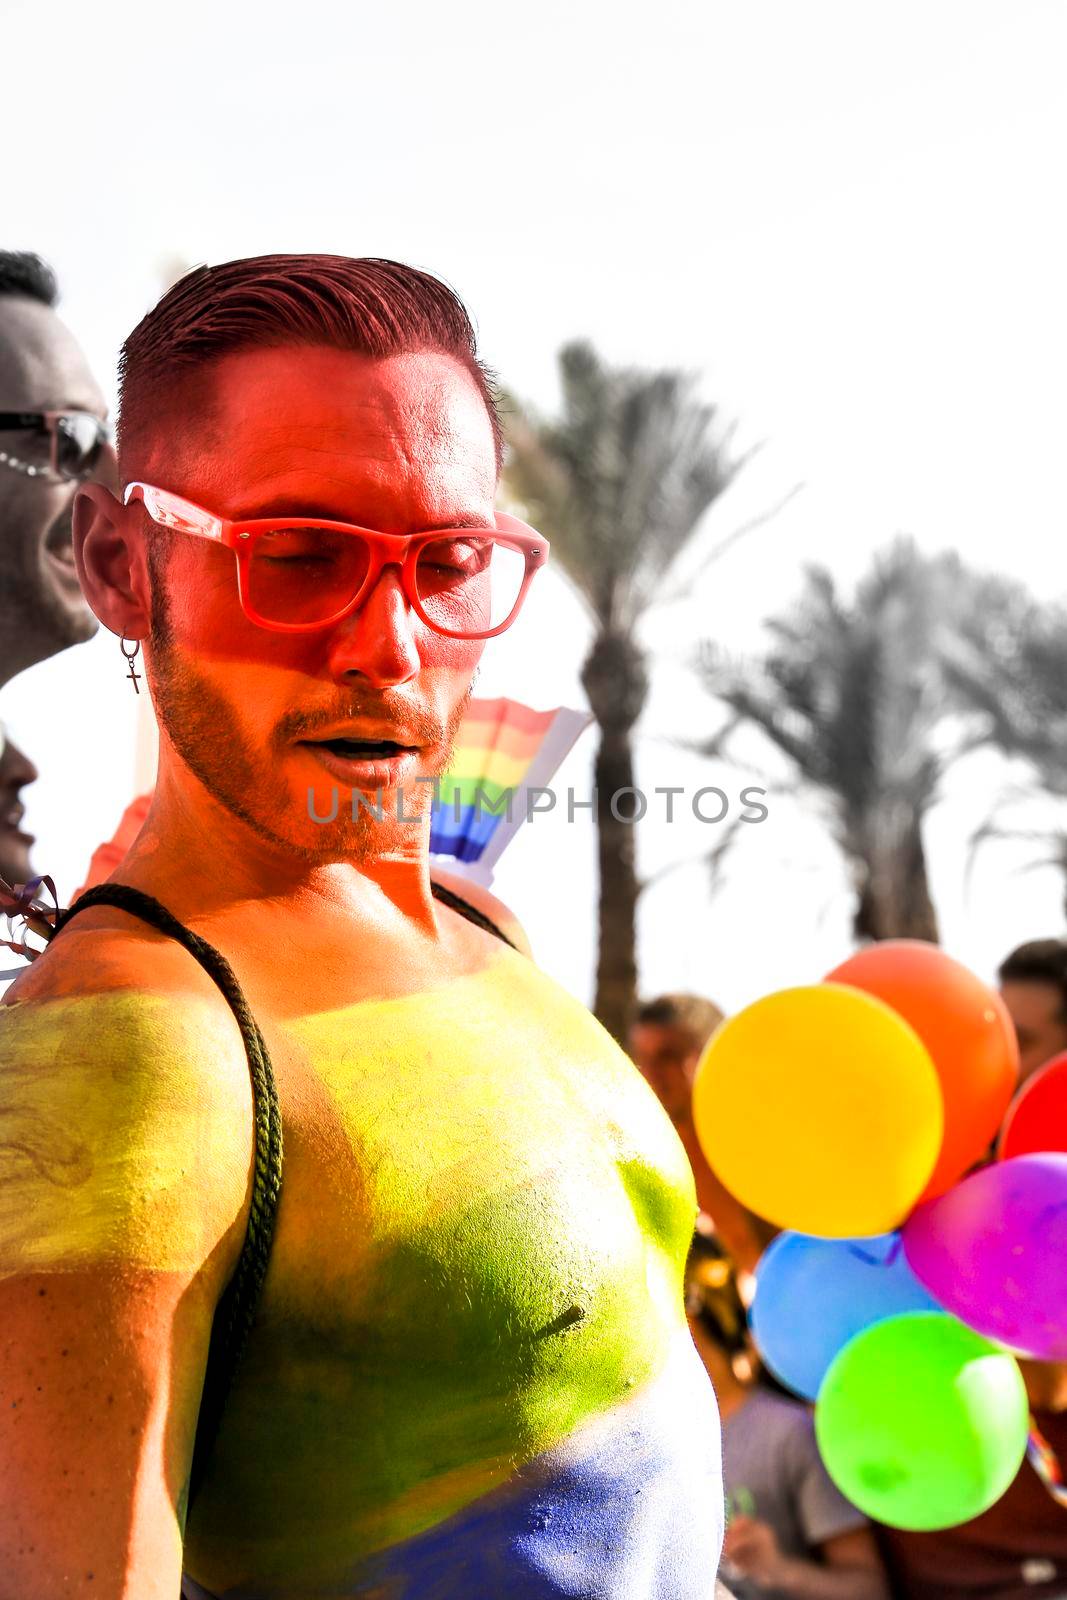 Benidorm, Alicante, Spain- September 10, 2022: People dancing and having fun at the Gay Pride Parade in Benidorm in September